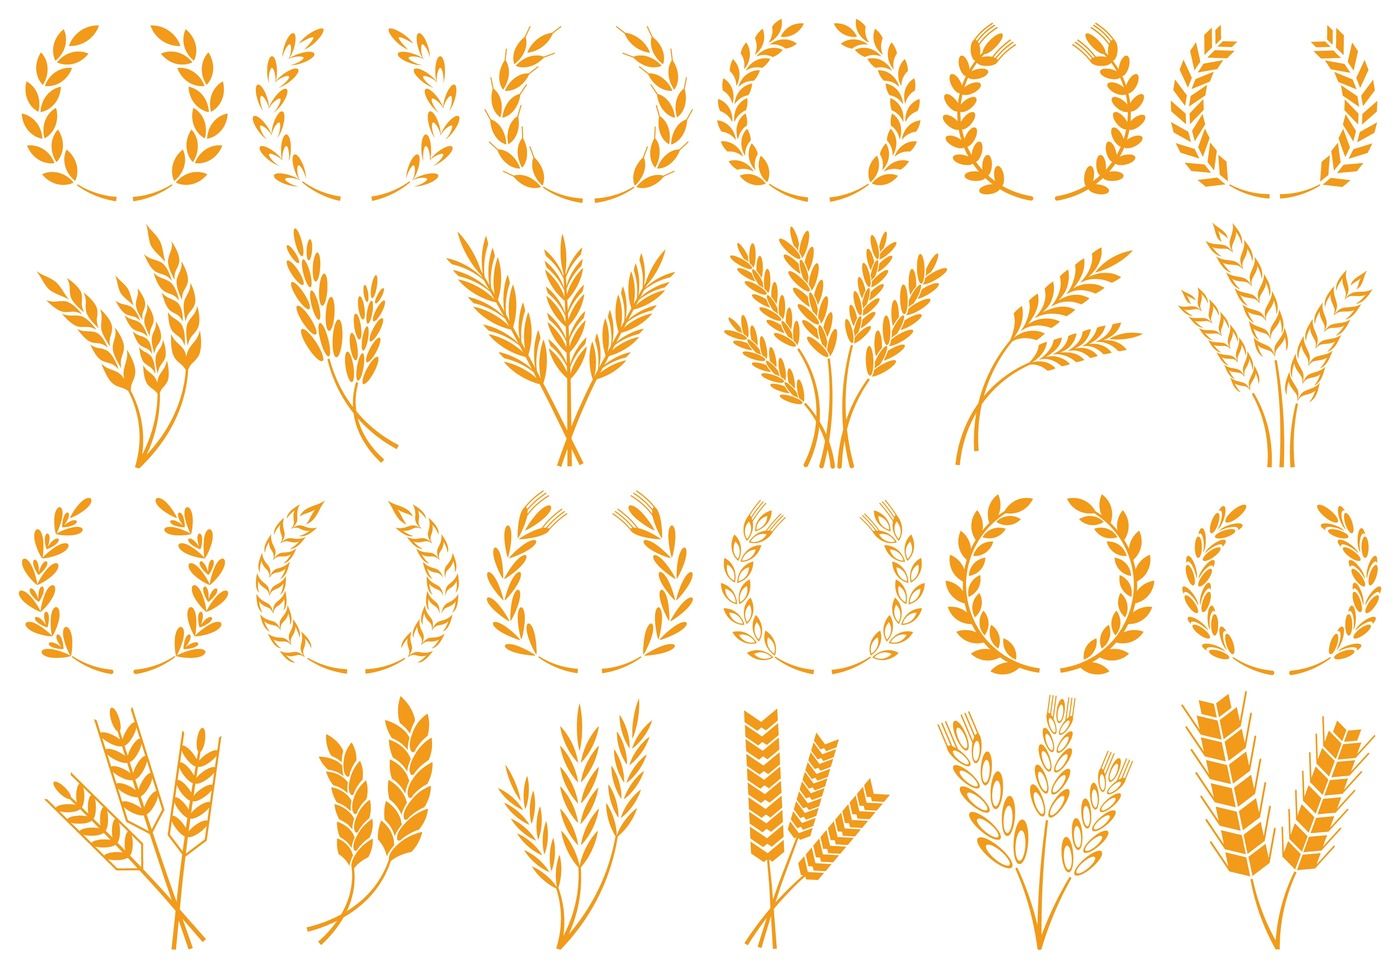 Wheat Or Barley Ears Harvest Wheat Grain Growth Rice Stalk And Bread By Tartila Thehungryjpeg Com